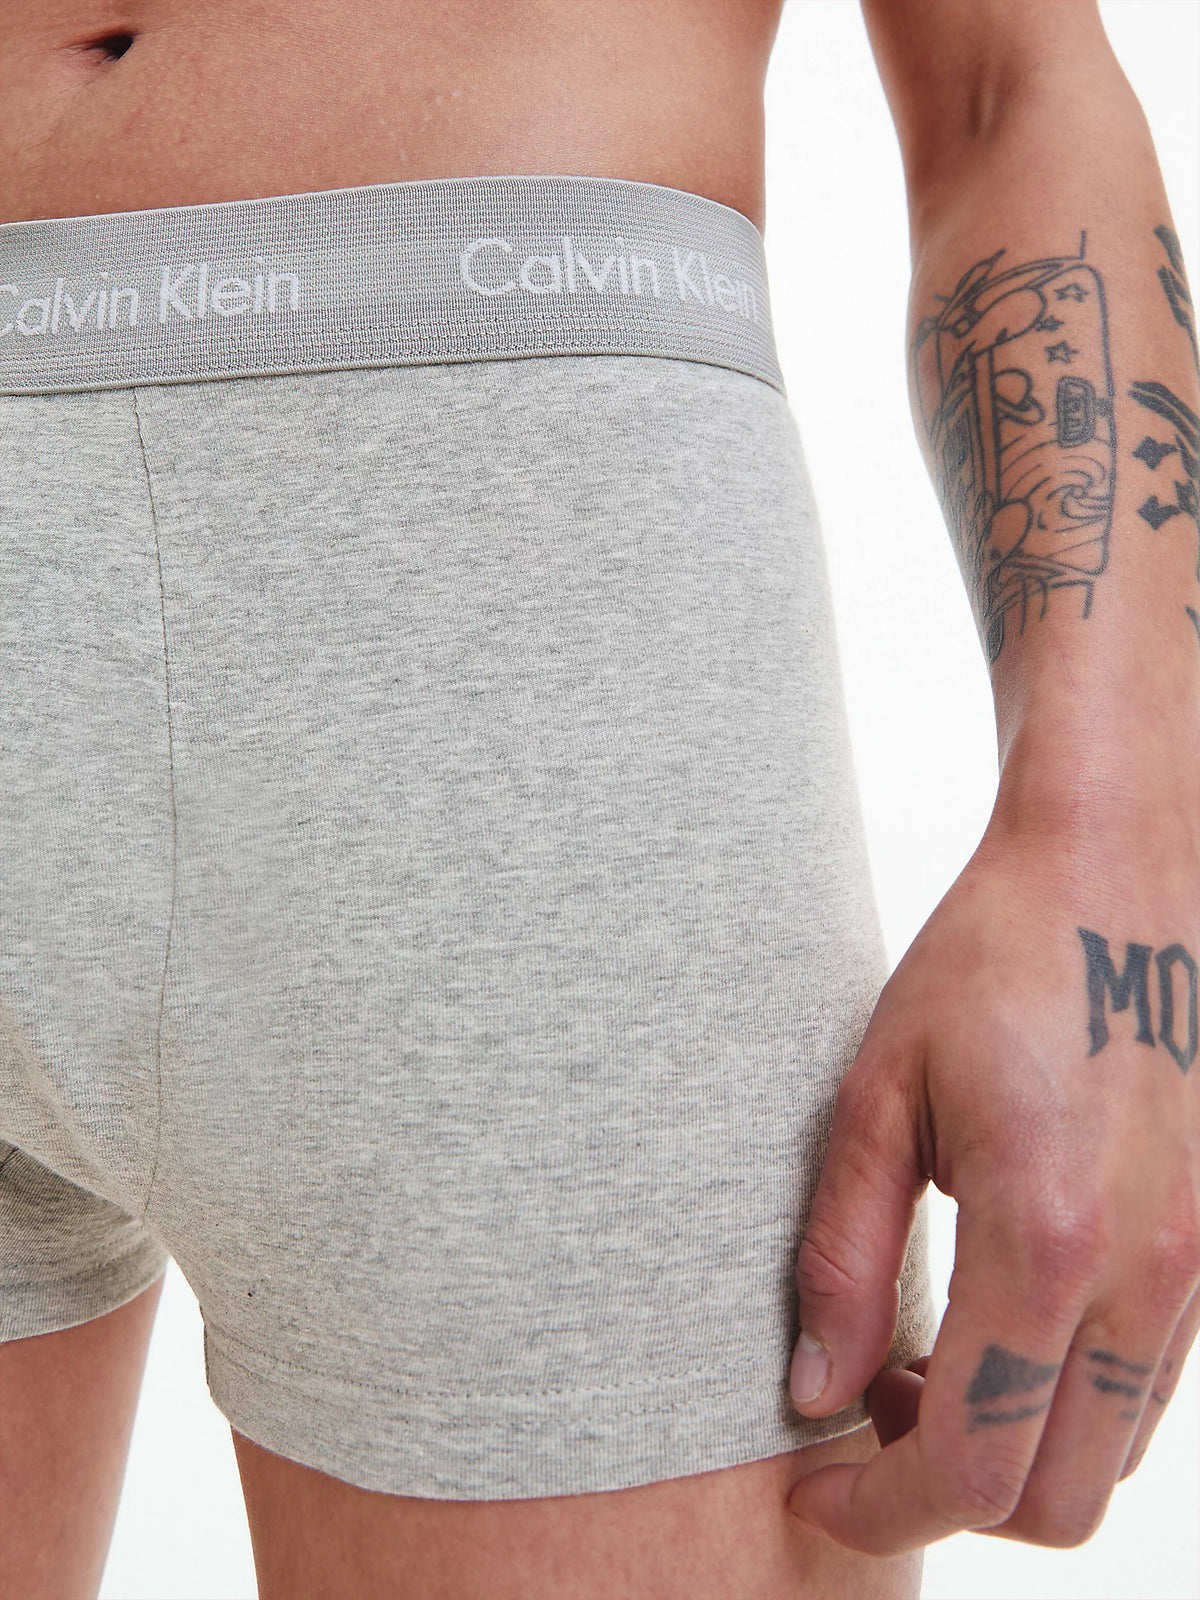 Mens Calvin Klein Boxer Shorts Low Rise Trunks 3 Pack, 05, U2664G, Rhone/ Charcoal Hthr/ Orange Odsy